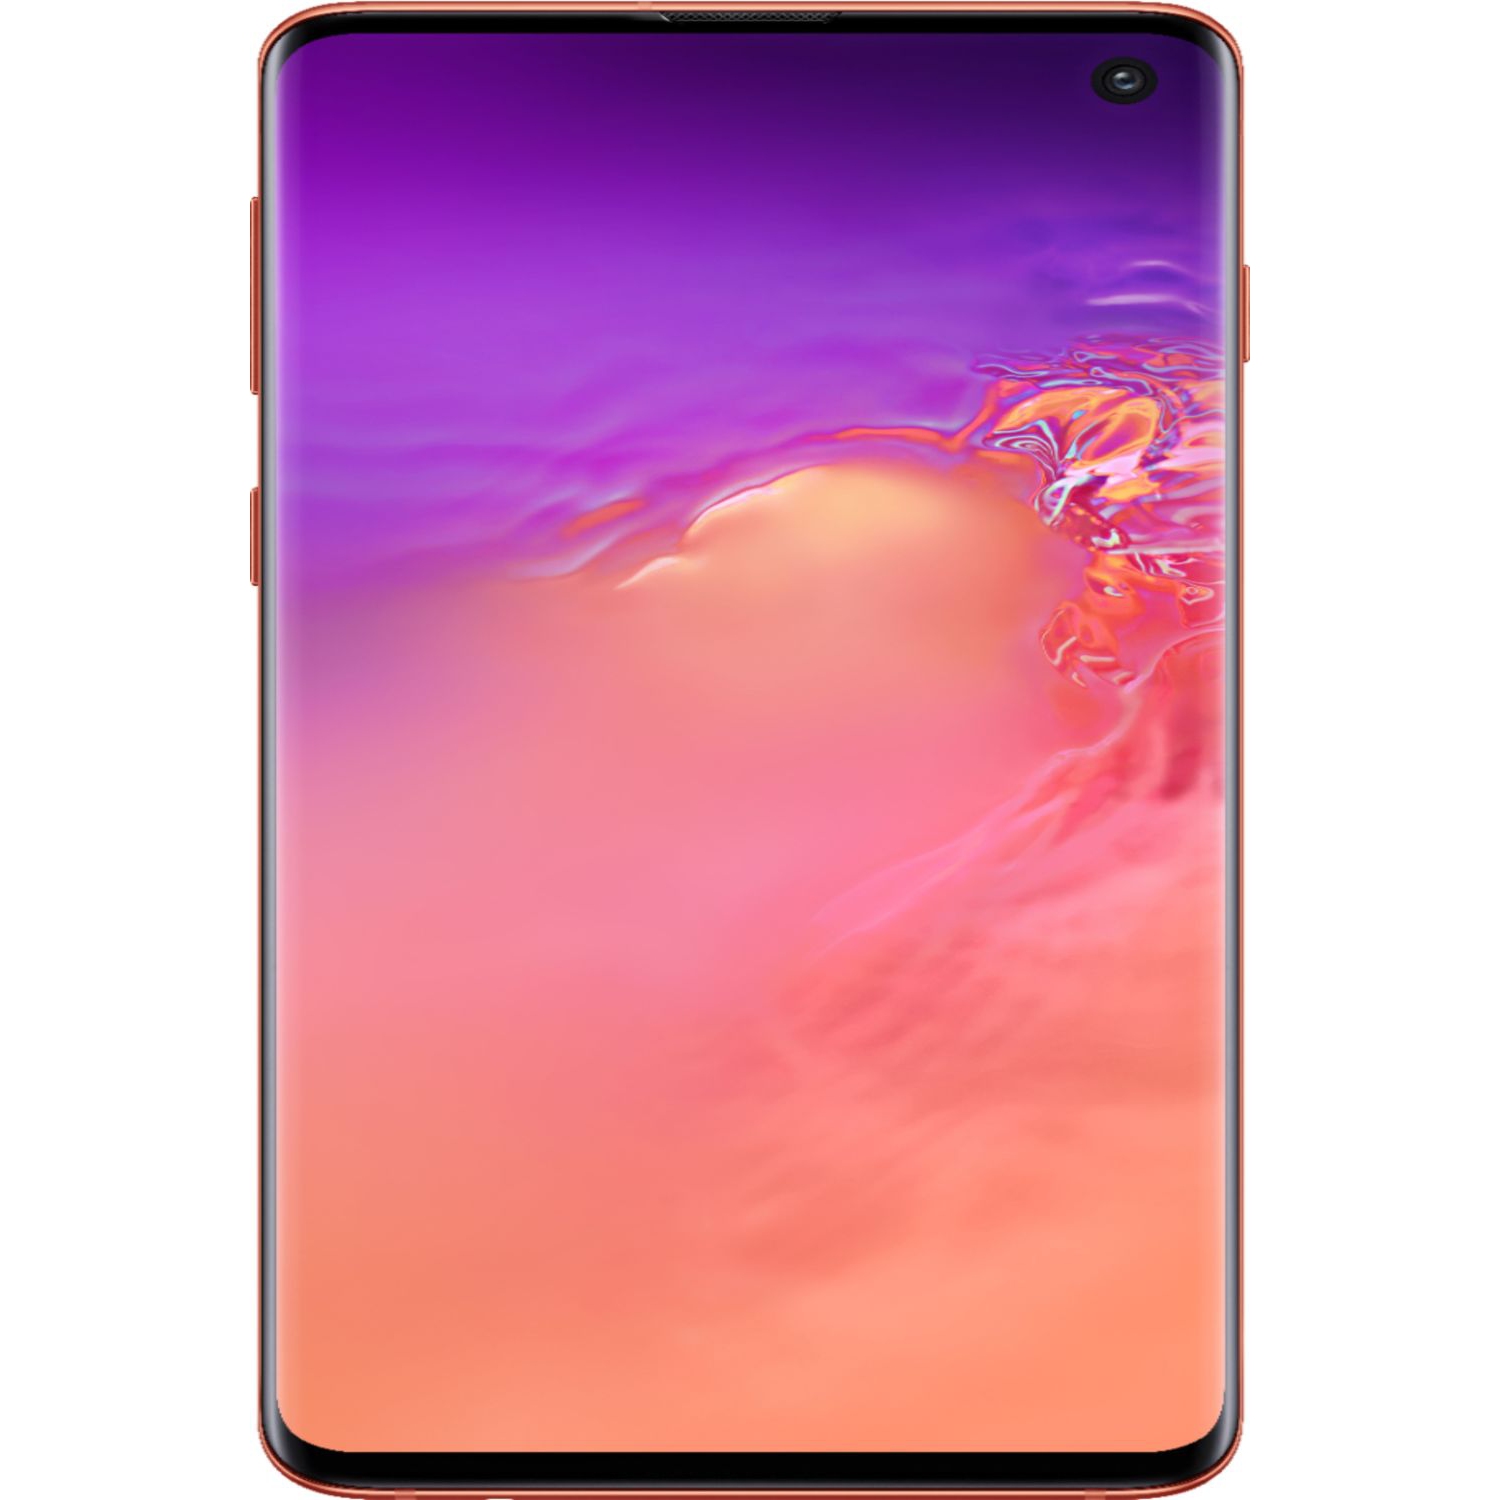 Samsung Galaxy S10 128GB Smartphone - Flamingo Pink - Unlocked - Open Box